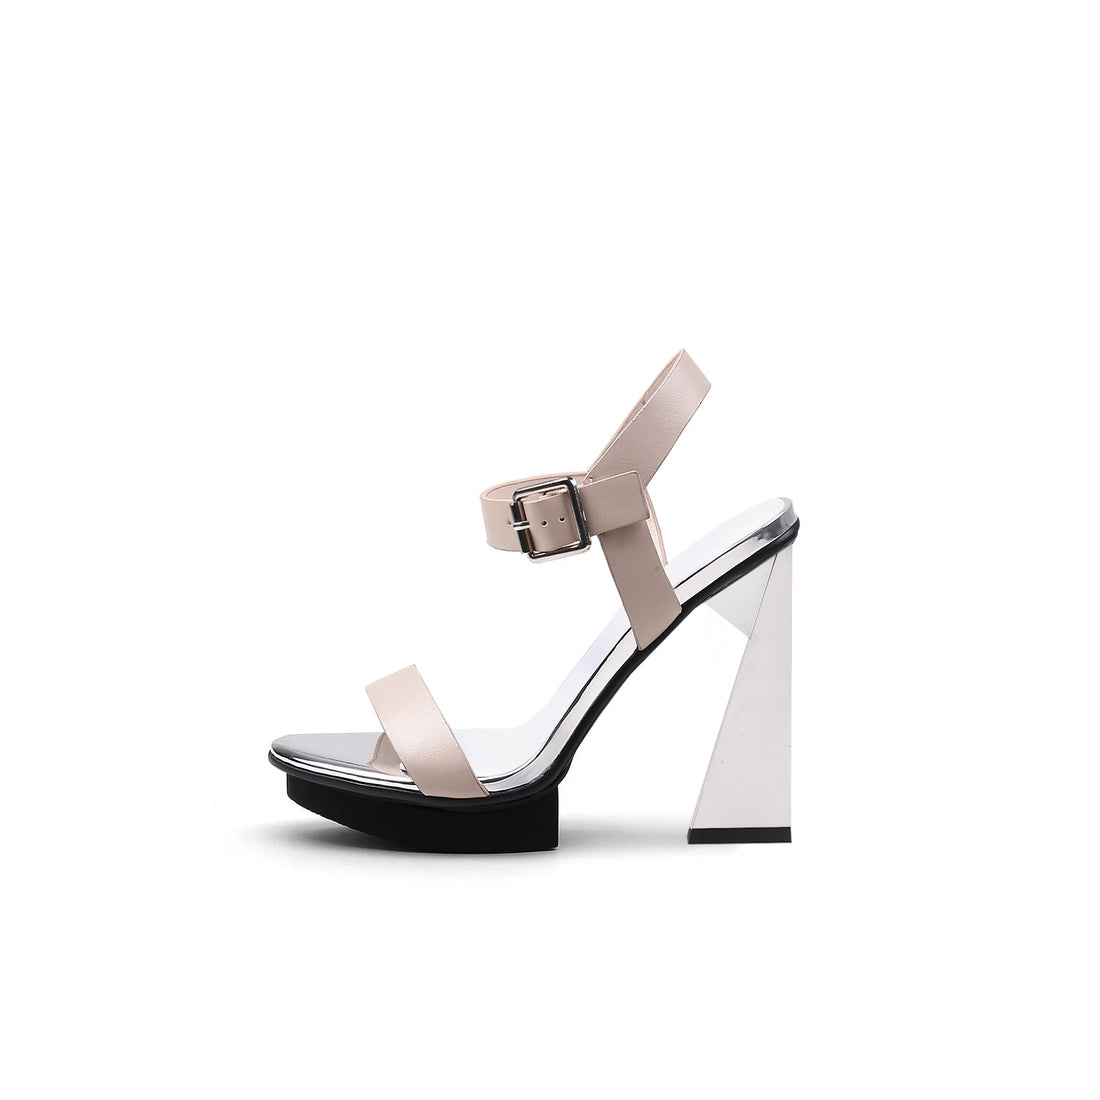 Silver Triangular Heel Apricot Sandals - 0cm